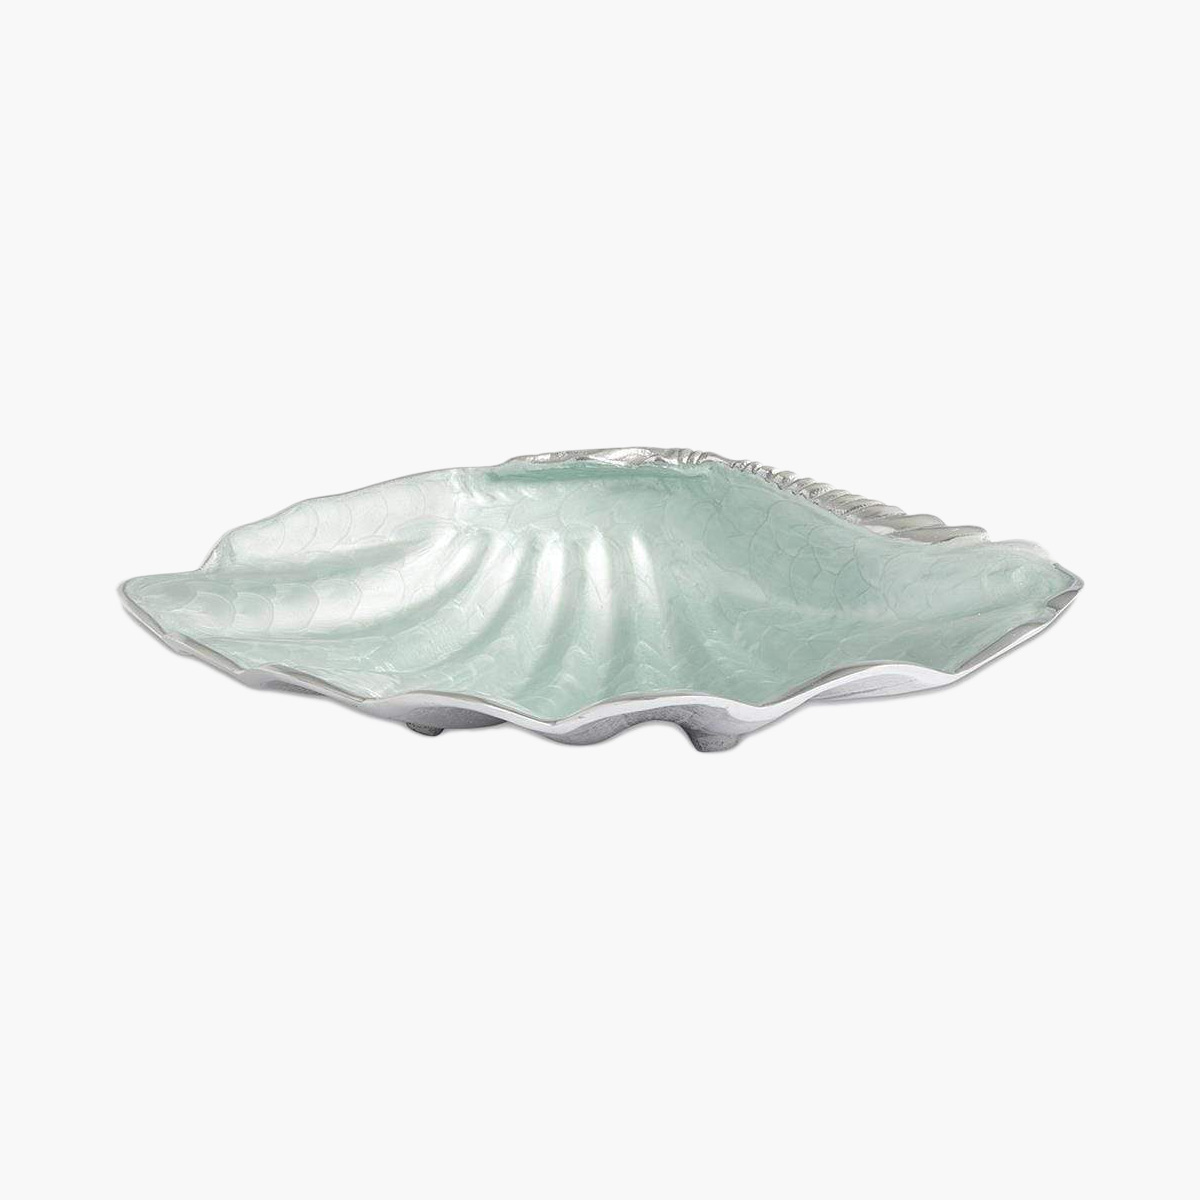 A ceramic clamshell bowl.